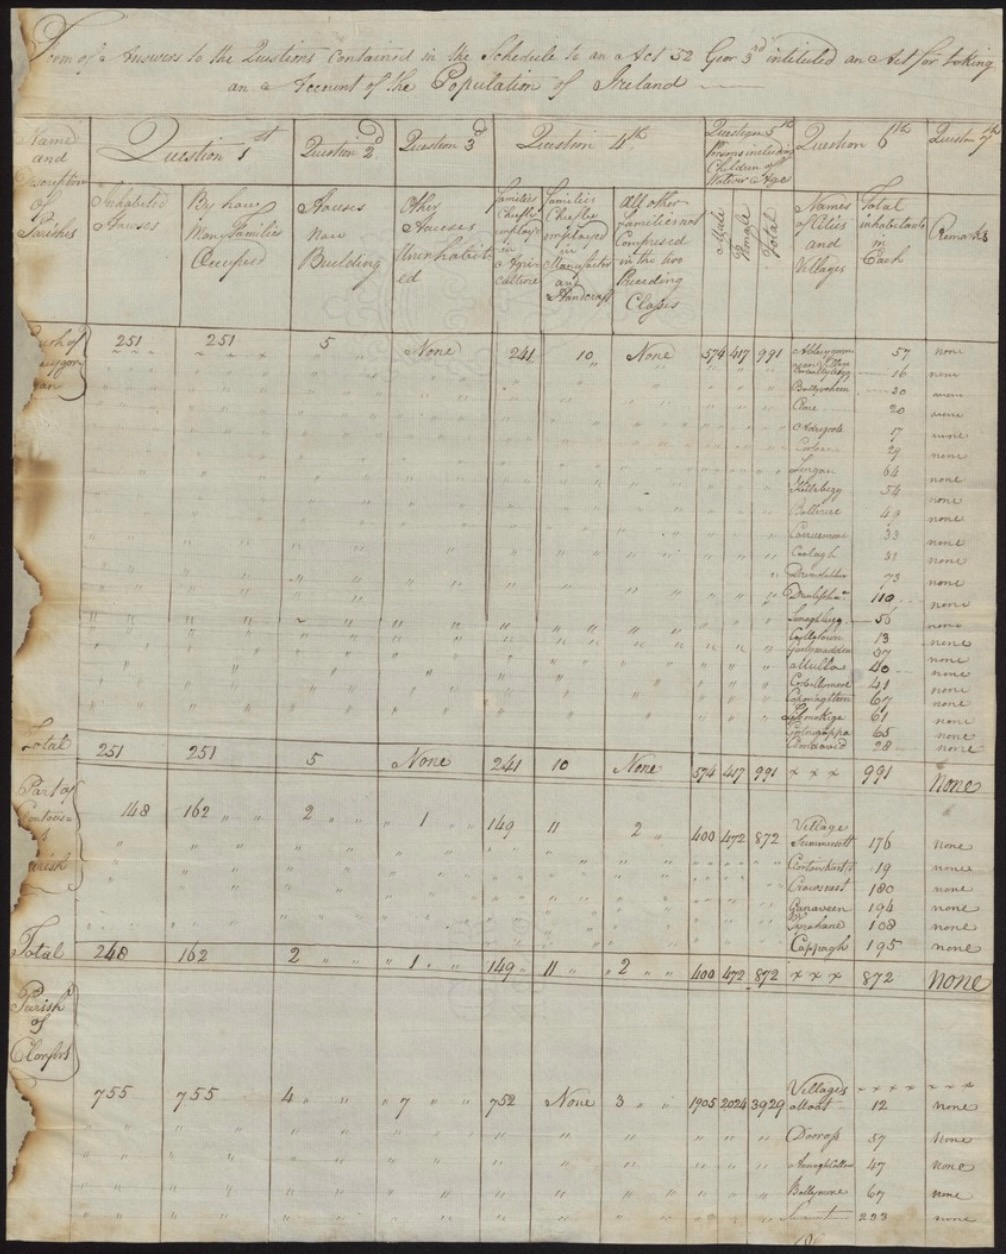 1813-5, Census return, Longford barony, County Galway (detailed return)